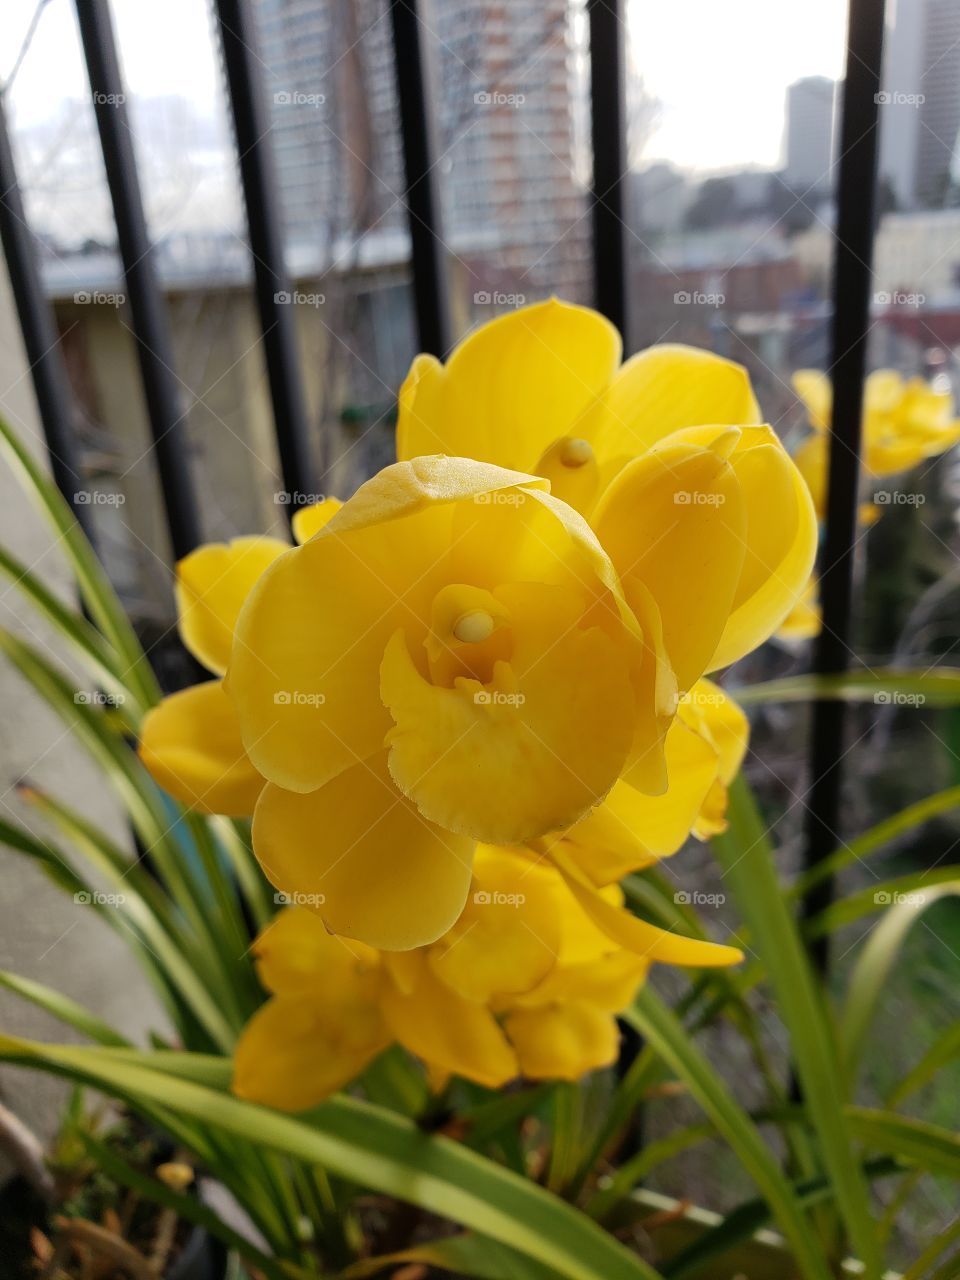 Fragrant yellow winter cymbidiums